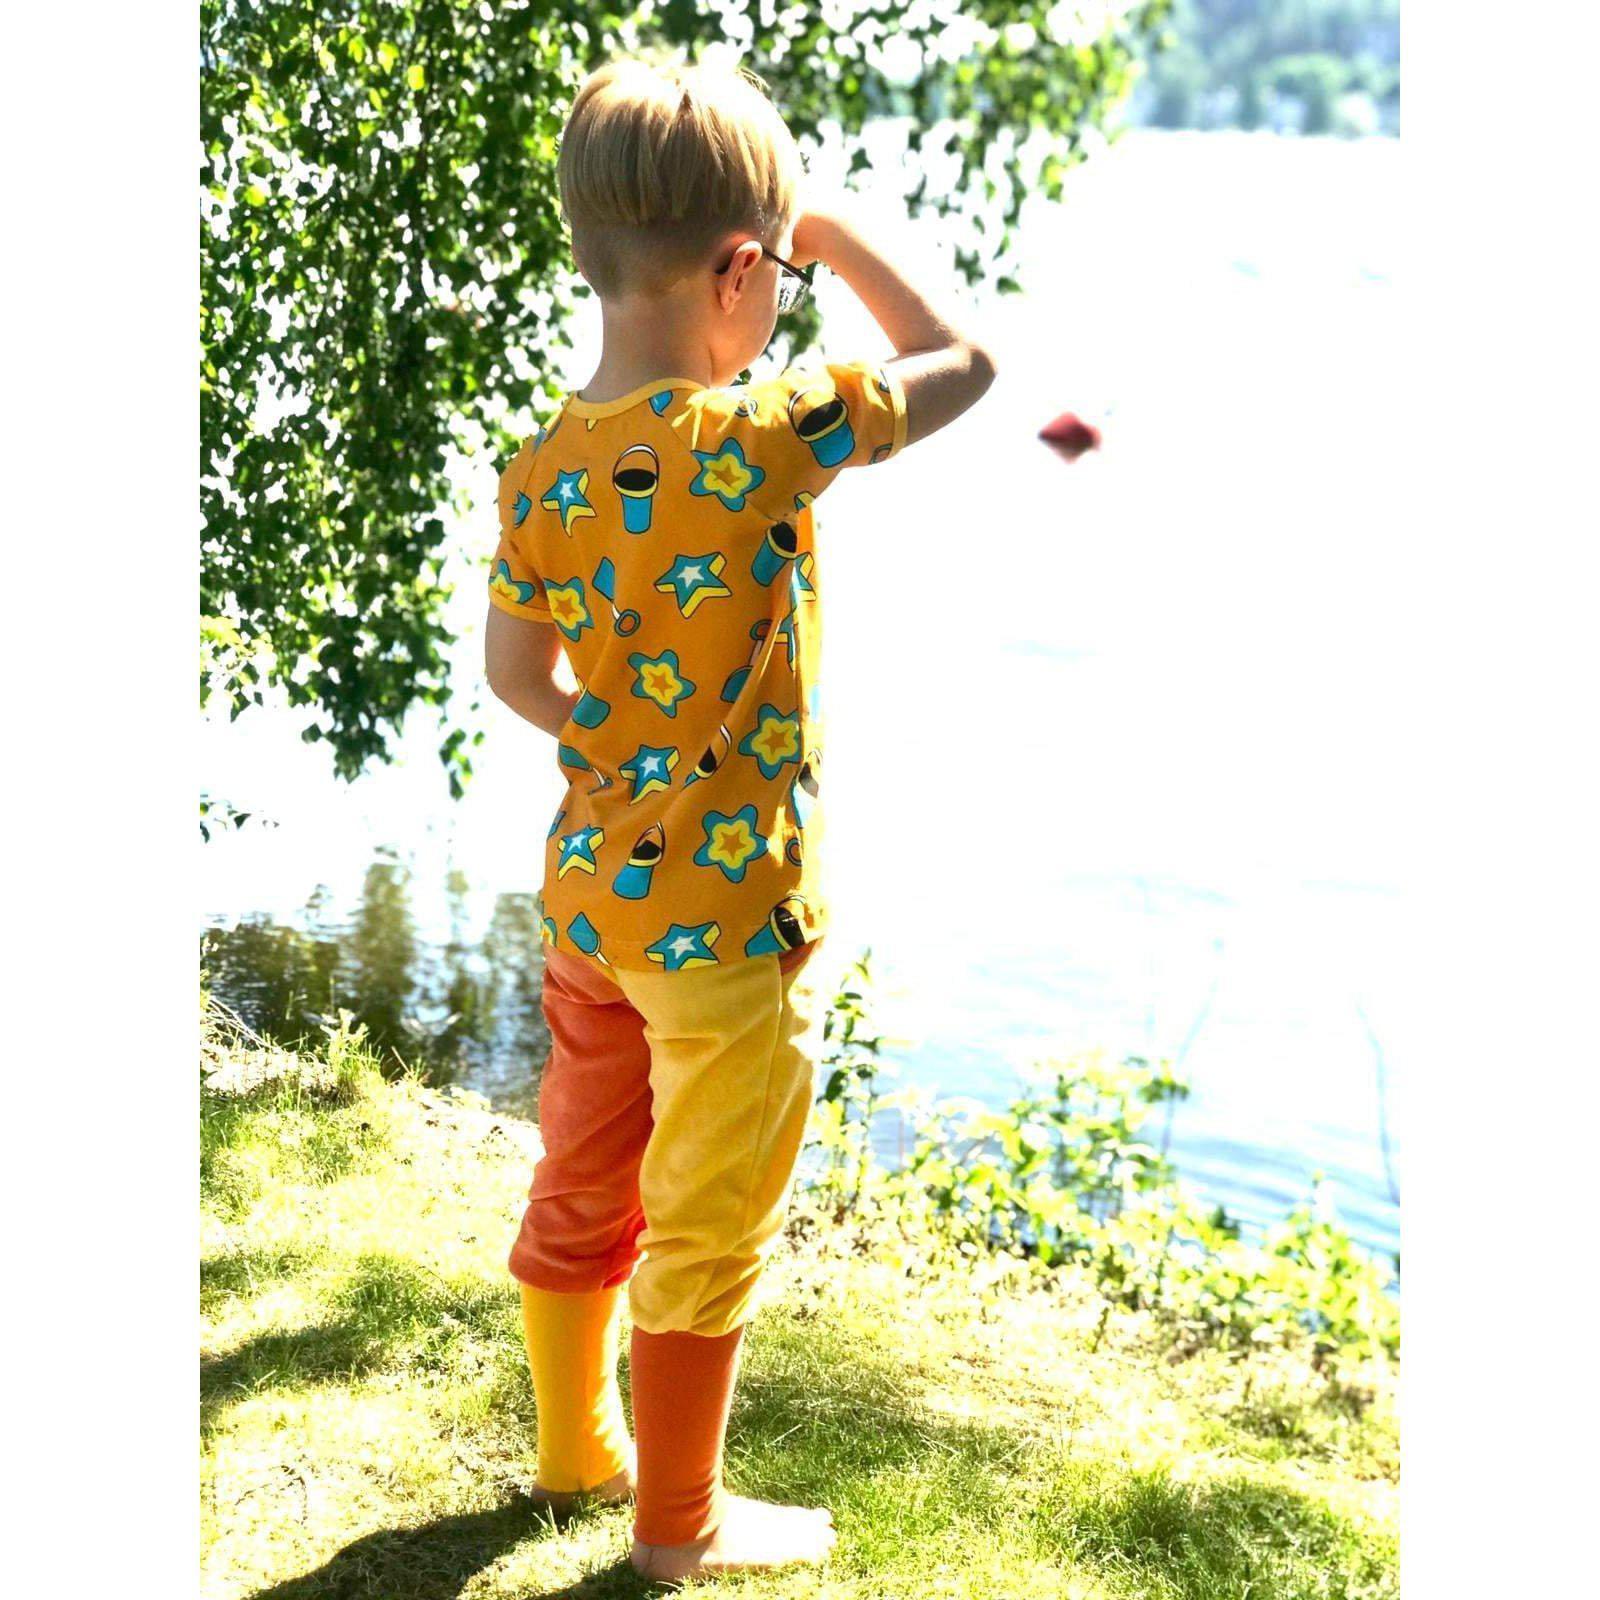 Naperonuttu - Orange/Yellow Velour Trousers (11-12 Years)